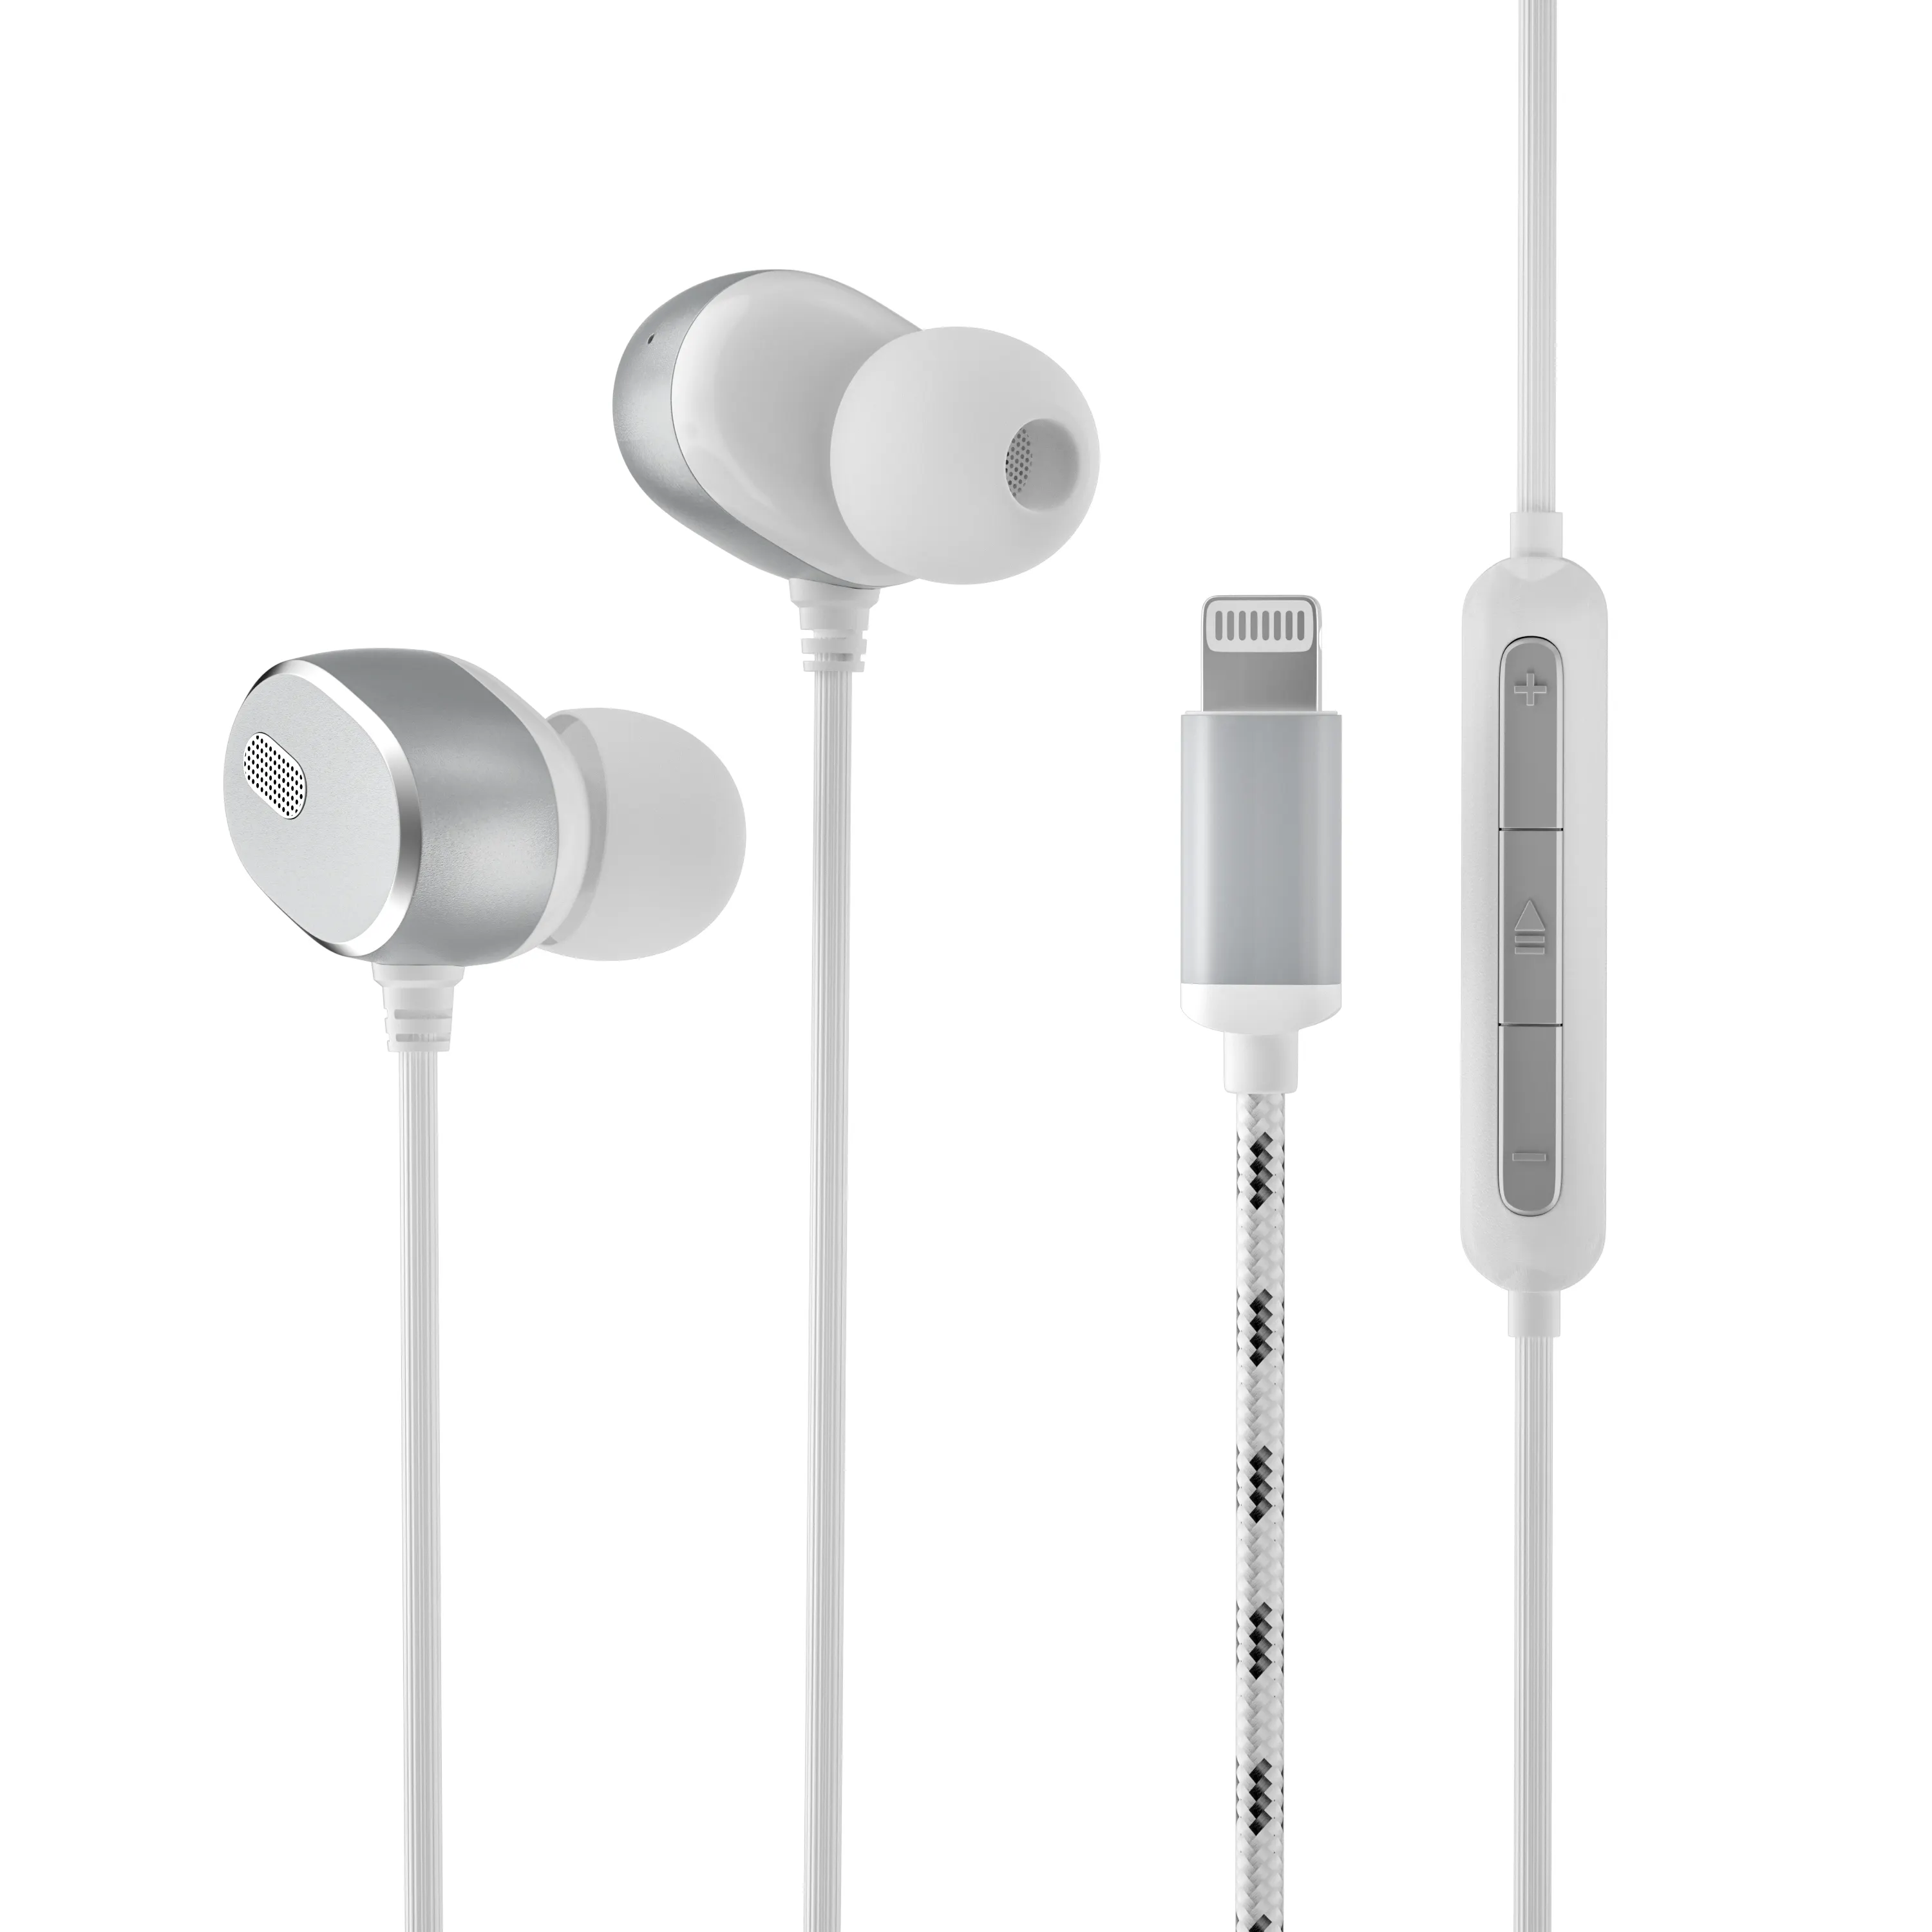 MFI 아이폰 라이트 닝 잭 이어폰 용 헤드폰 Apple 장치에 사용되는 마이크 및 볼륨 컨트롤러가있는 이어폰